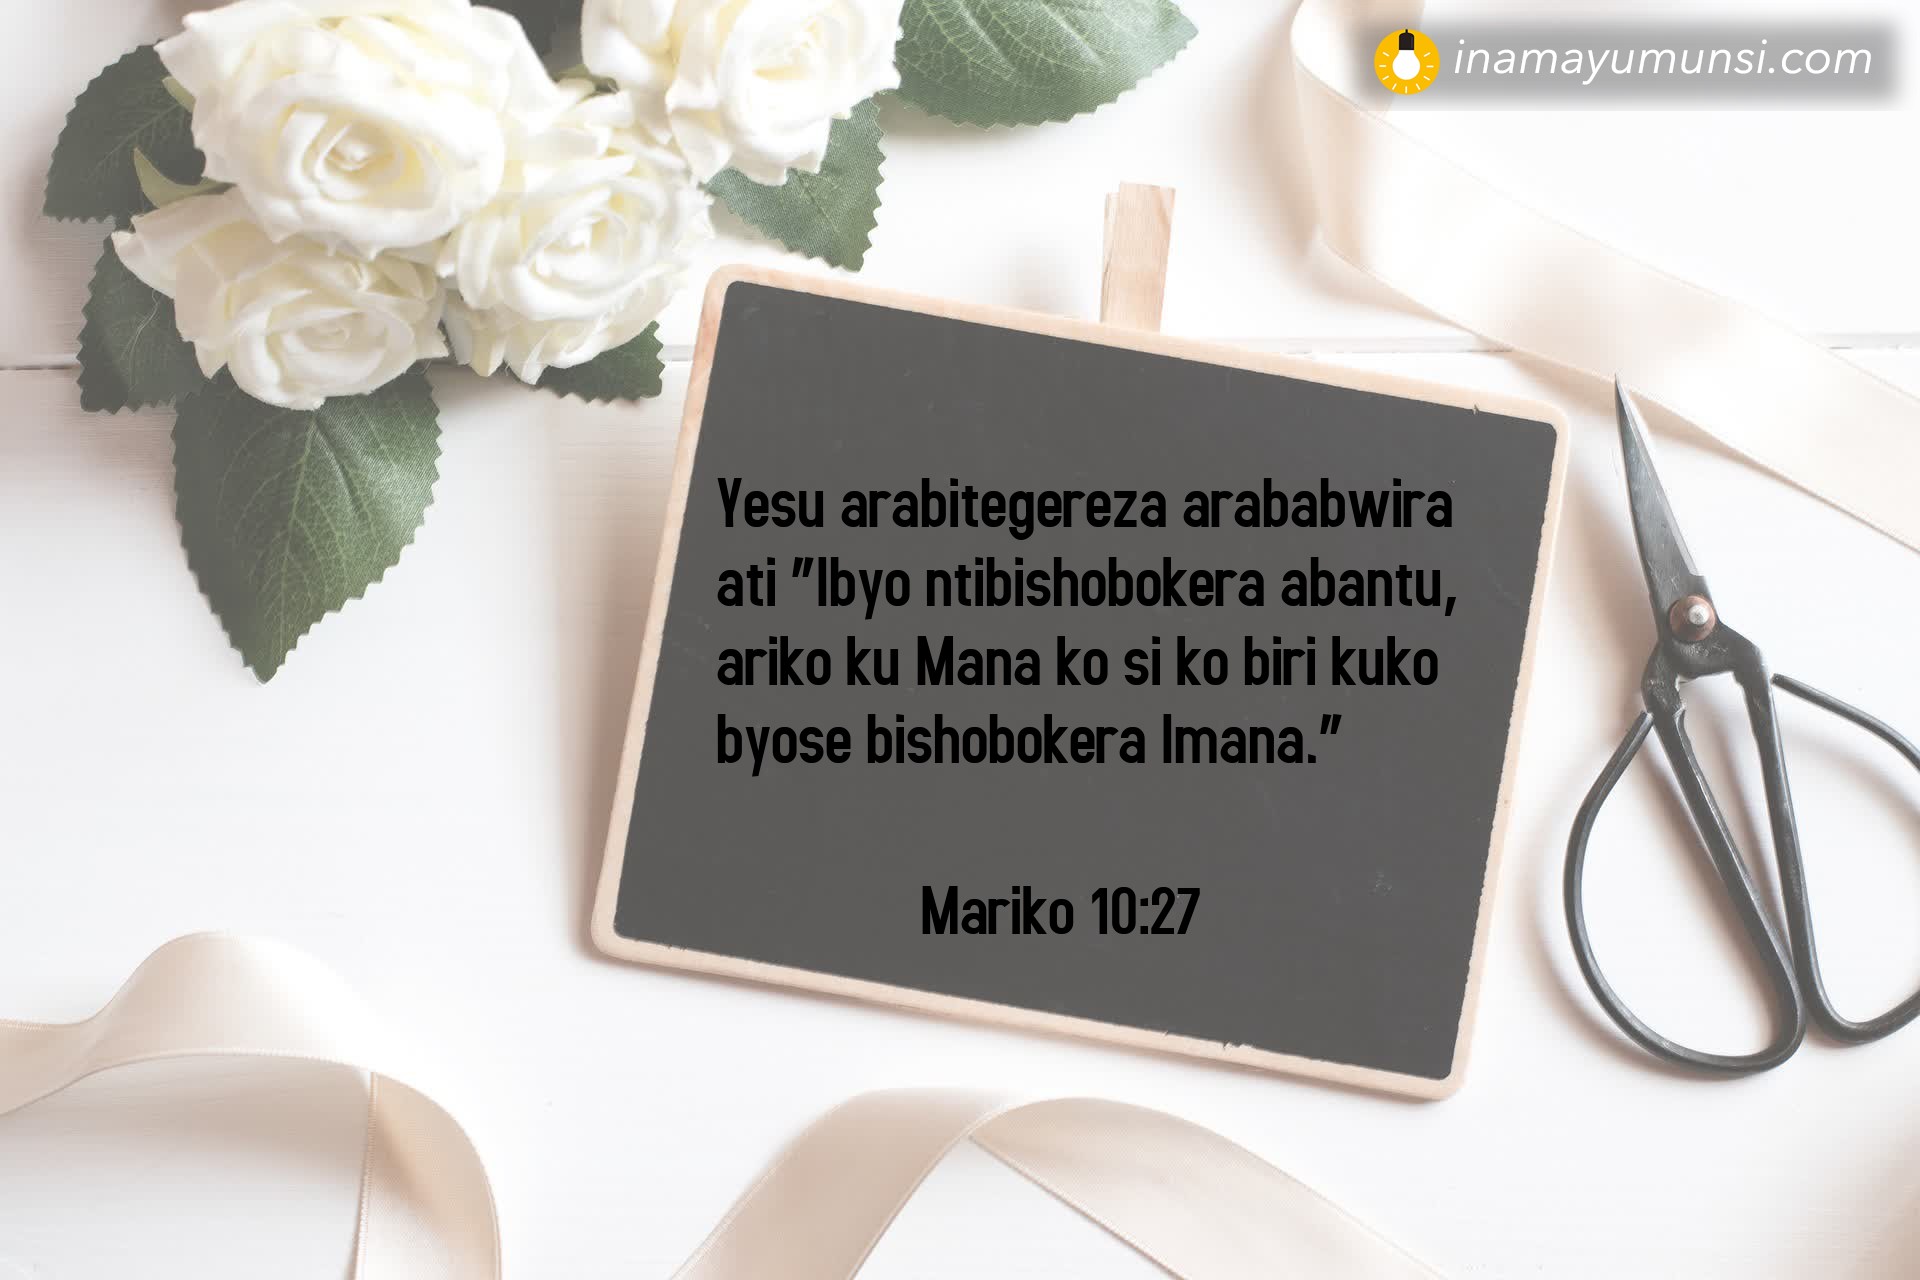 Mariko 10:27 ⇒ Yesu arabitegereza arababwira ati “Ibyo ntibishobokera abantu, ariko ku ..